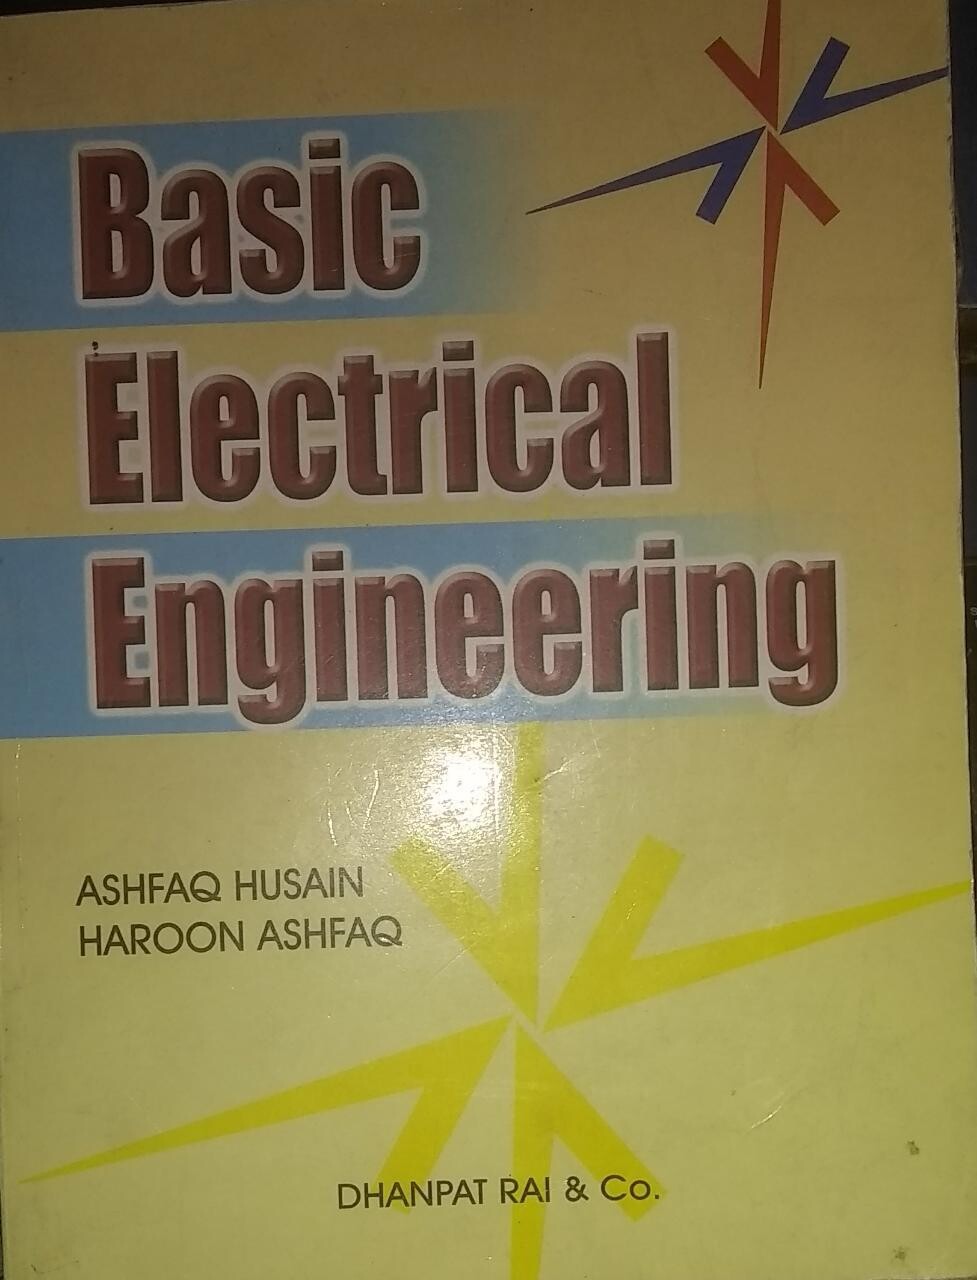 Basic Electrical Engineering by Asfaq Husain and Haroon Ashfaq